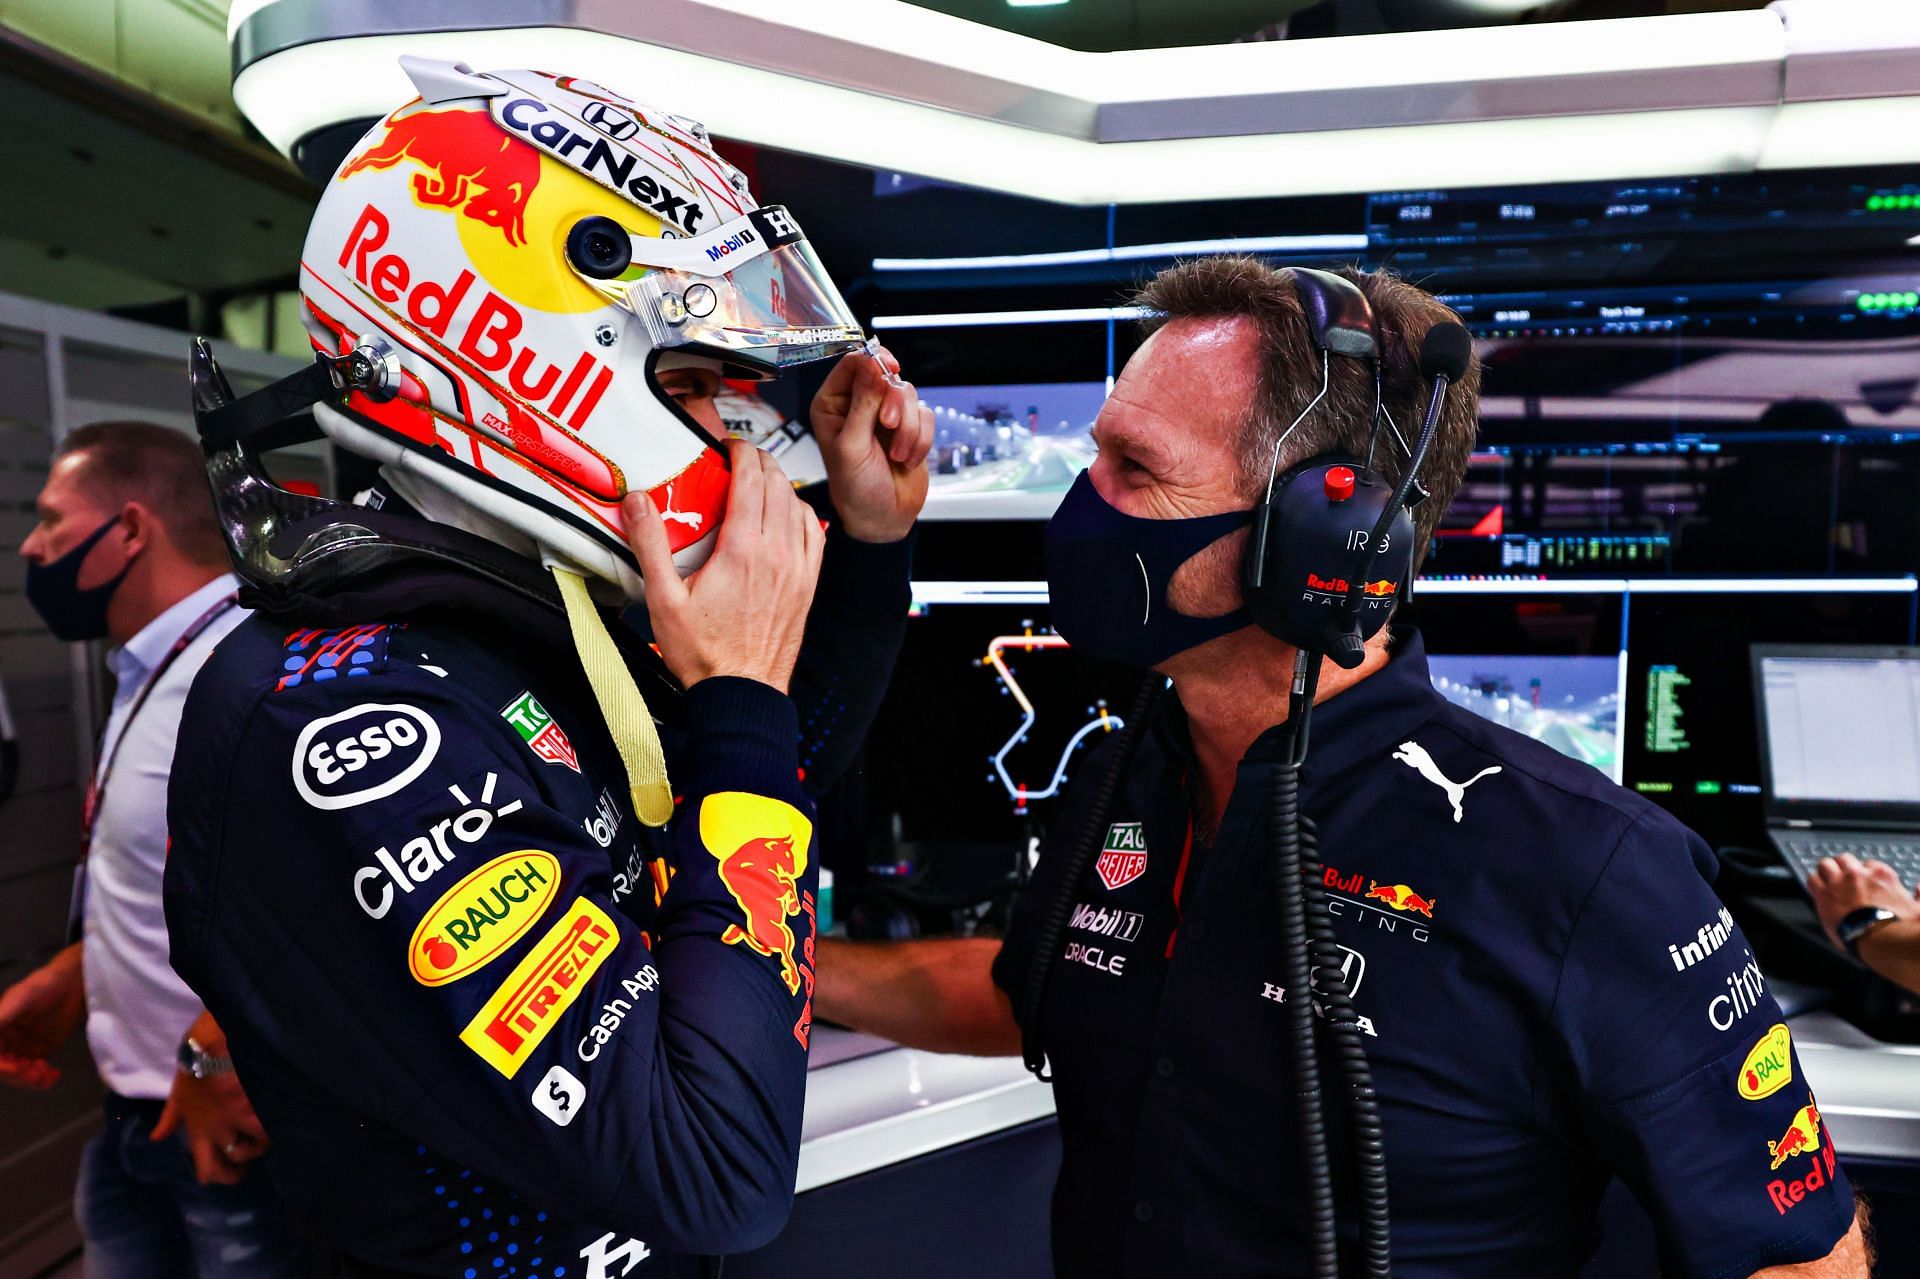 F1 Grand Prix of Qatar - Christian Horner checks on Max Verstappen during qualifying.